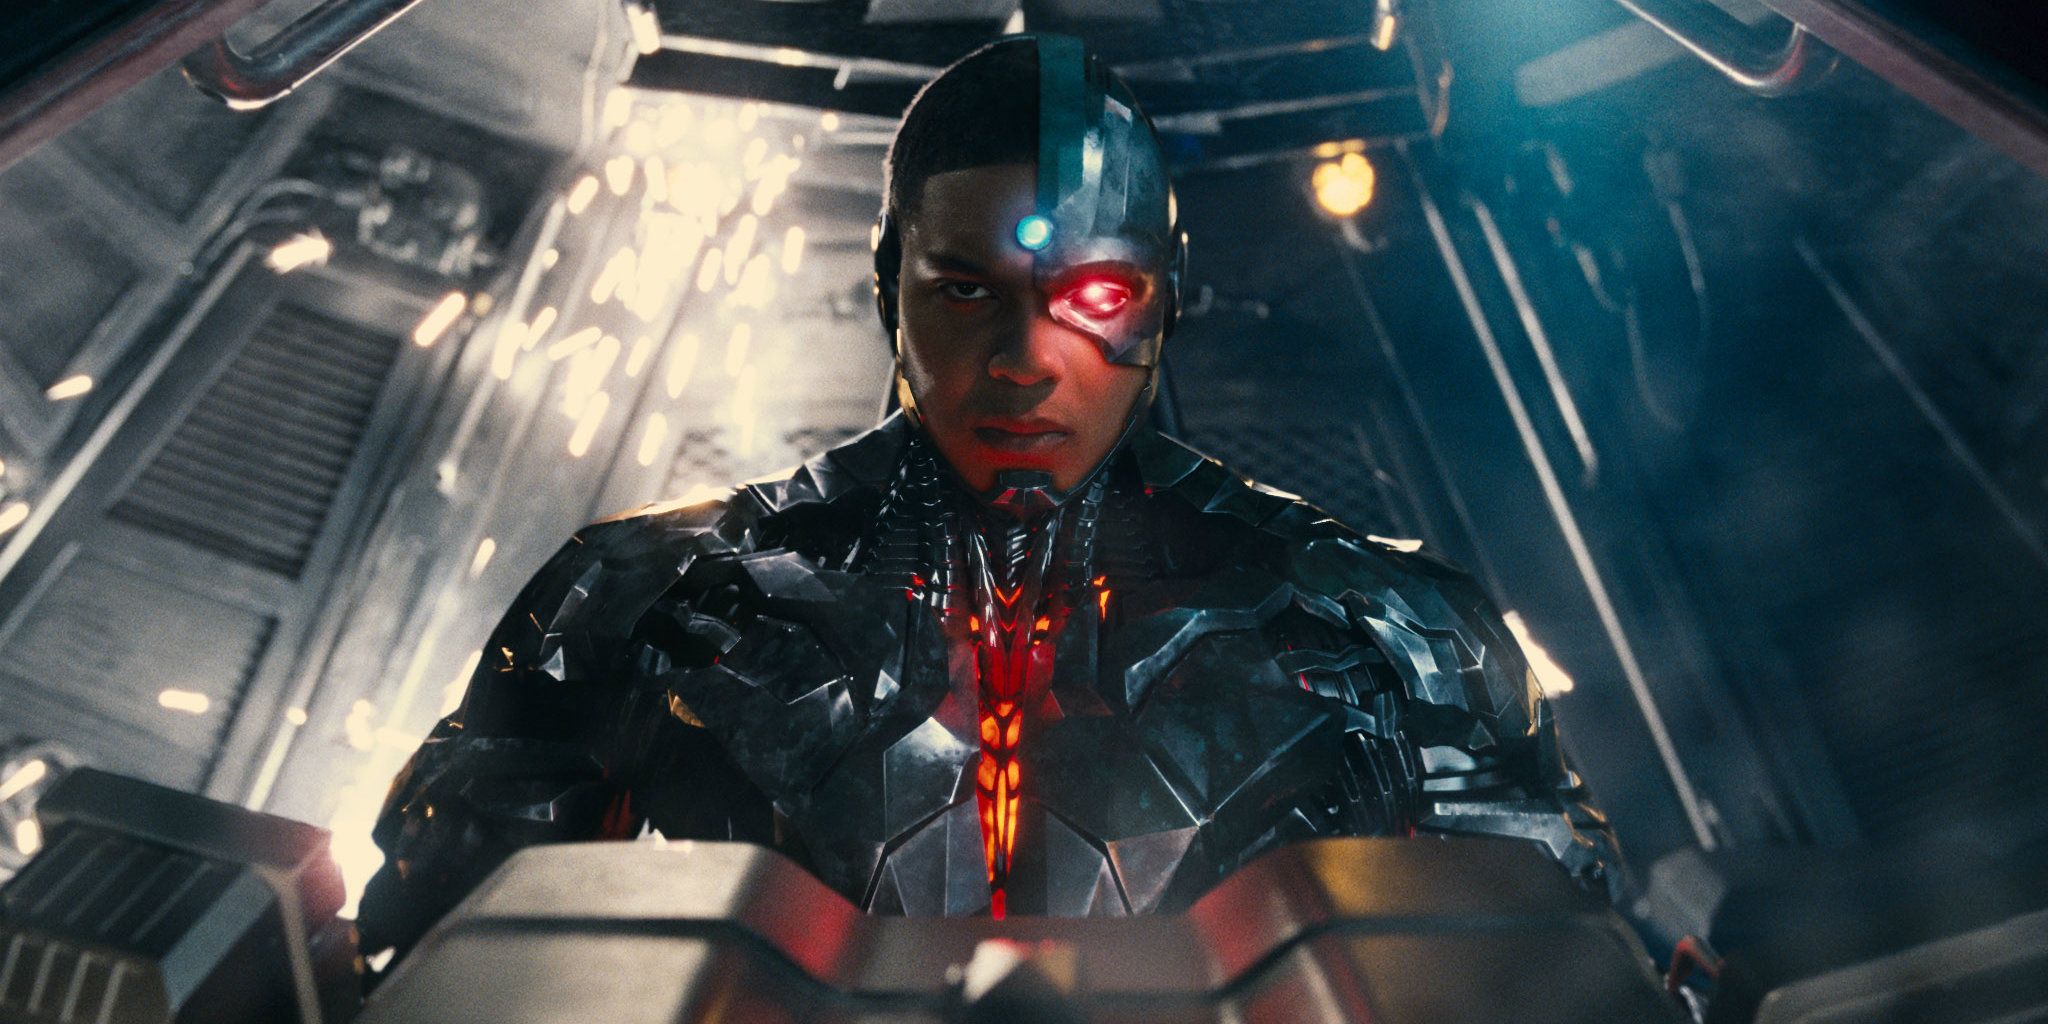 Cyborg flying the Nightcrawler in Justice League